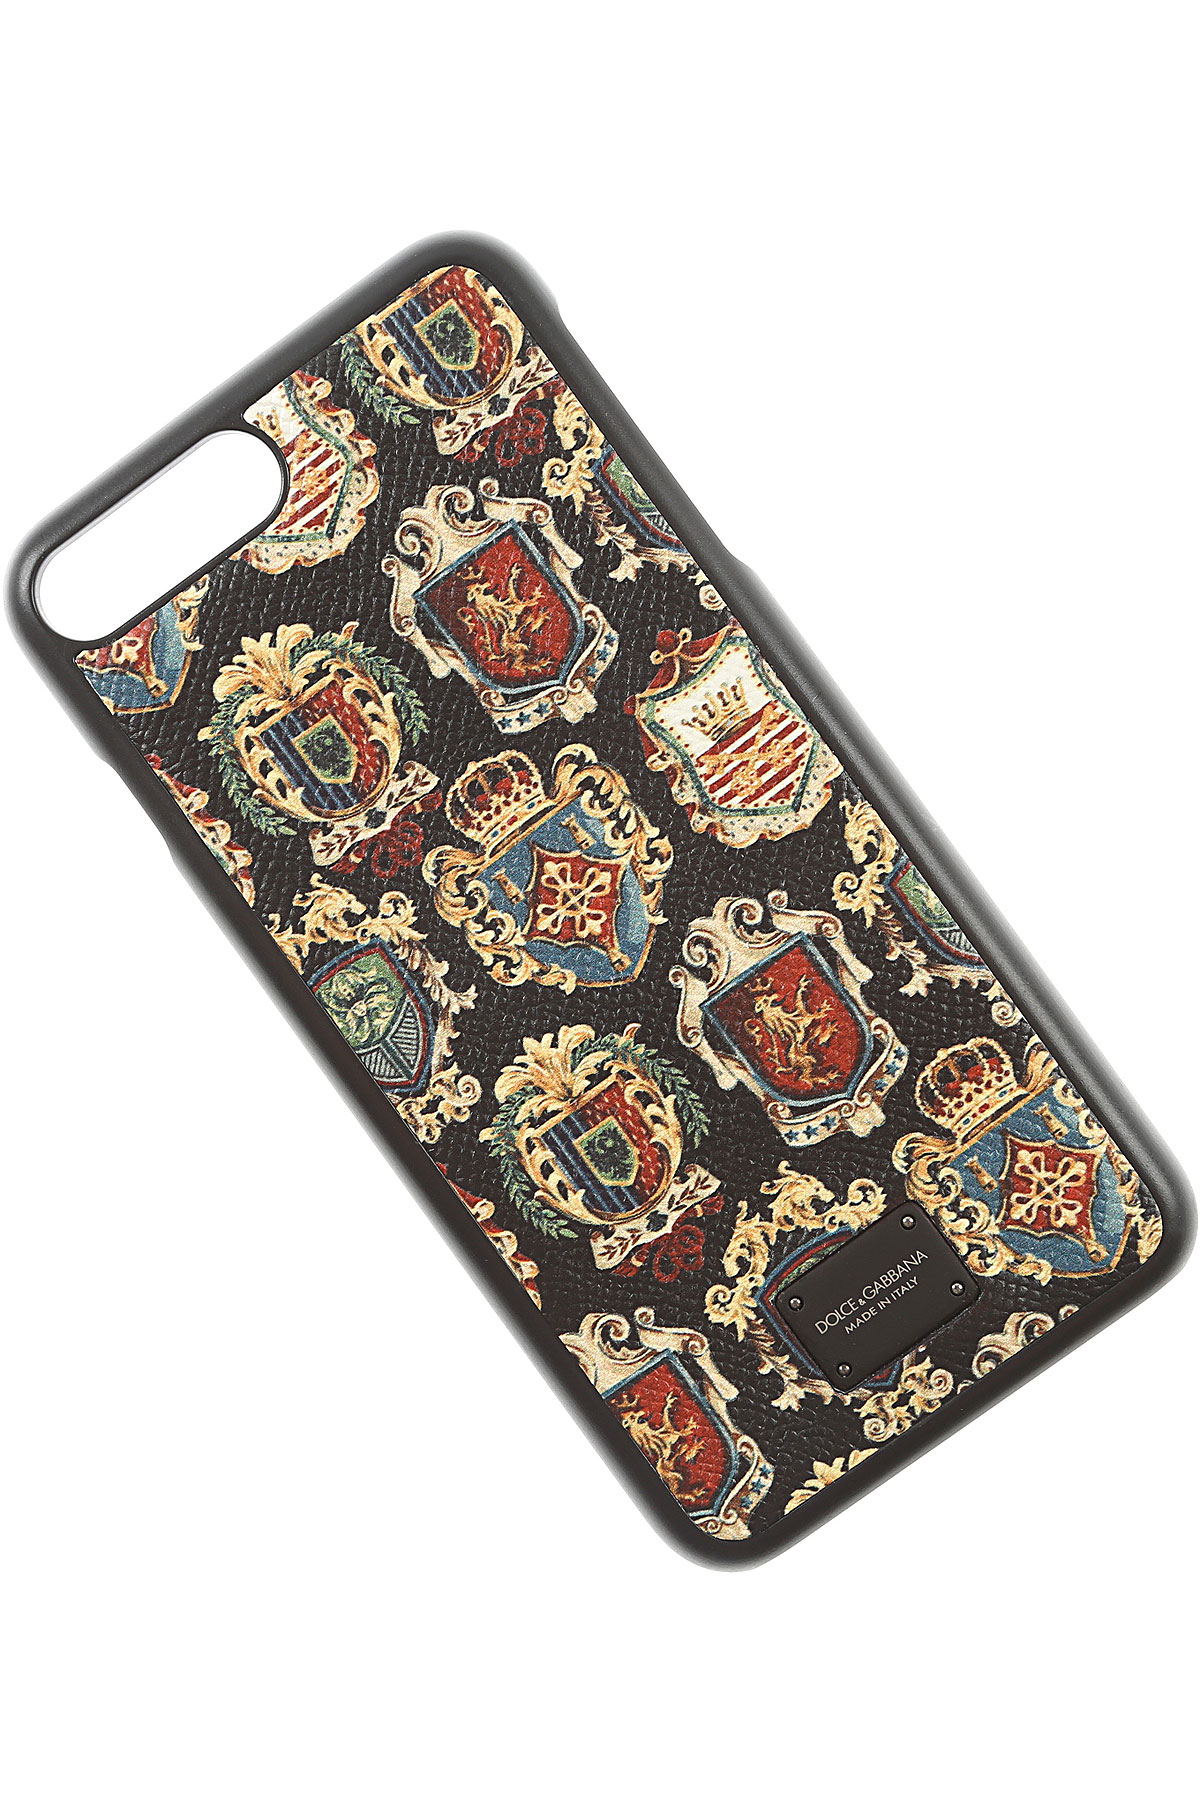 iPhone Cases Dolce & Gabbana, Style code: bp2263-ai363-hnc41